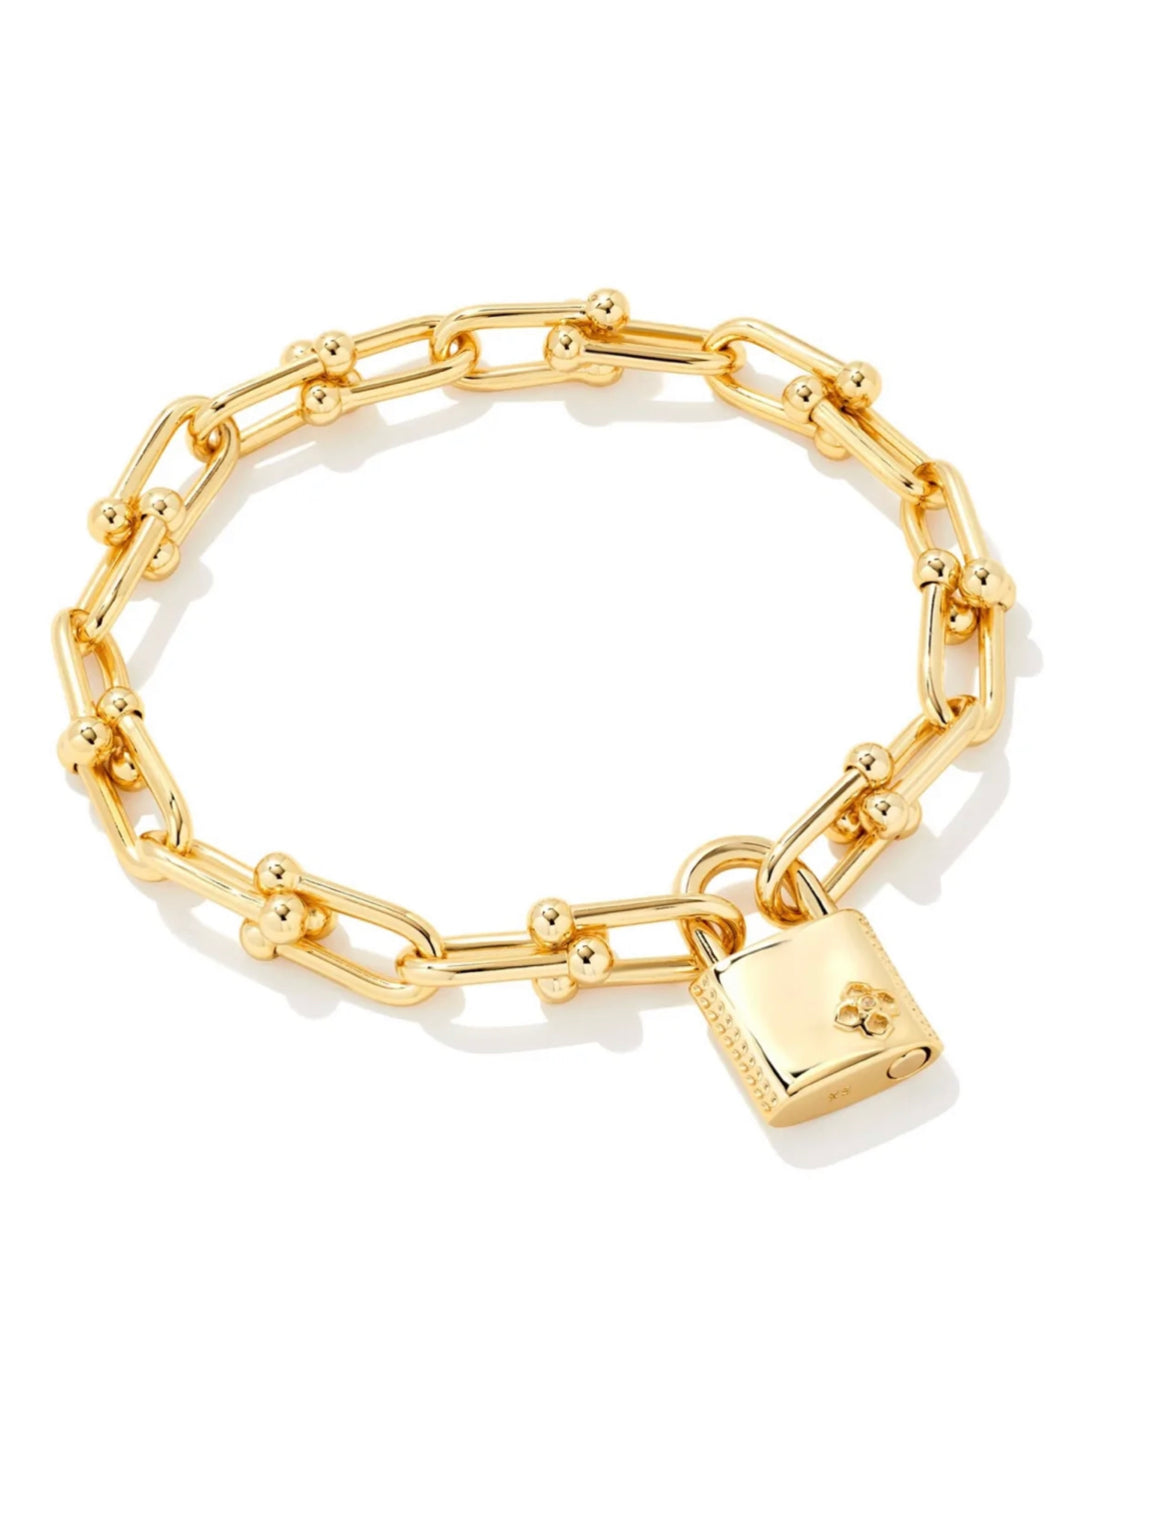 Kendra Scott Jess Lock Chain Bracelet - Available in 2 Colors